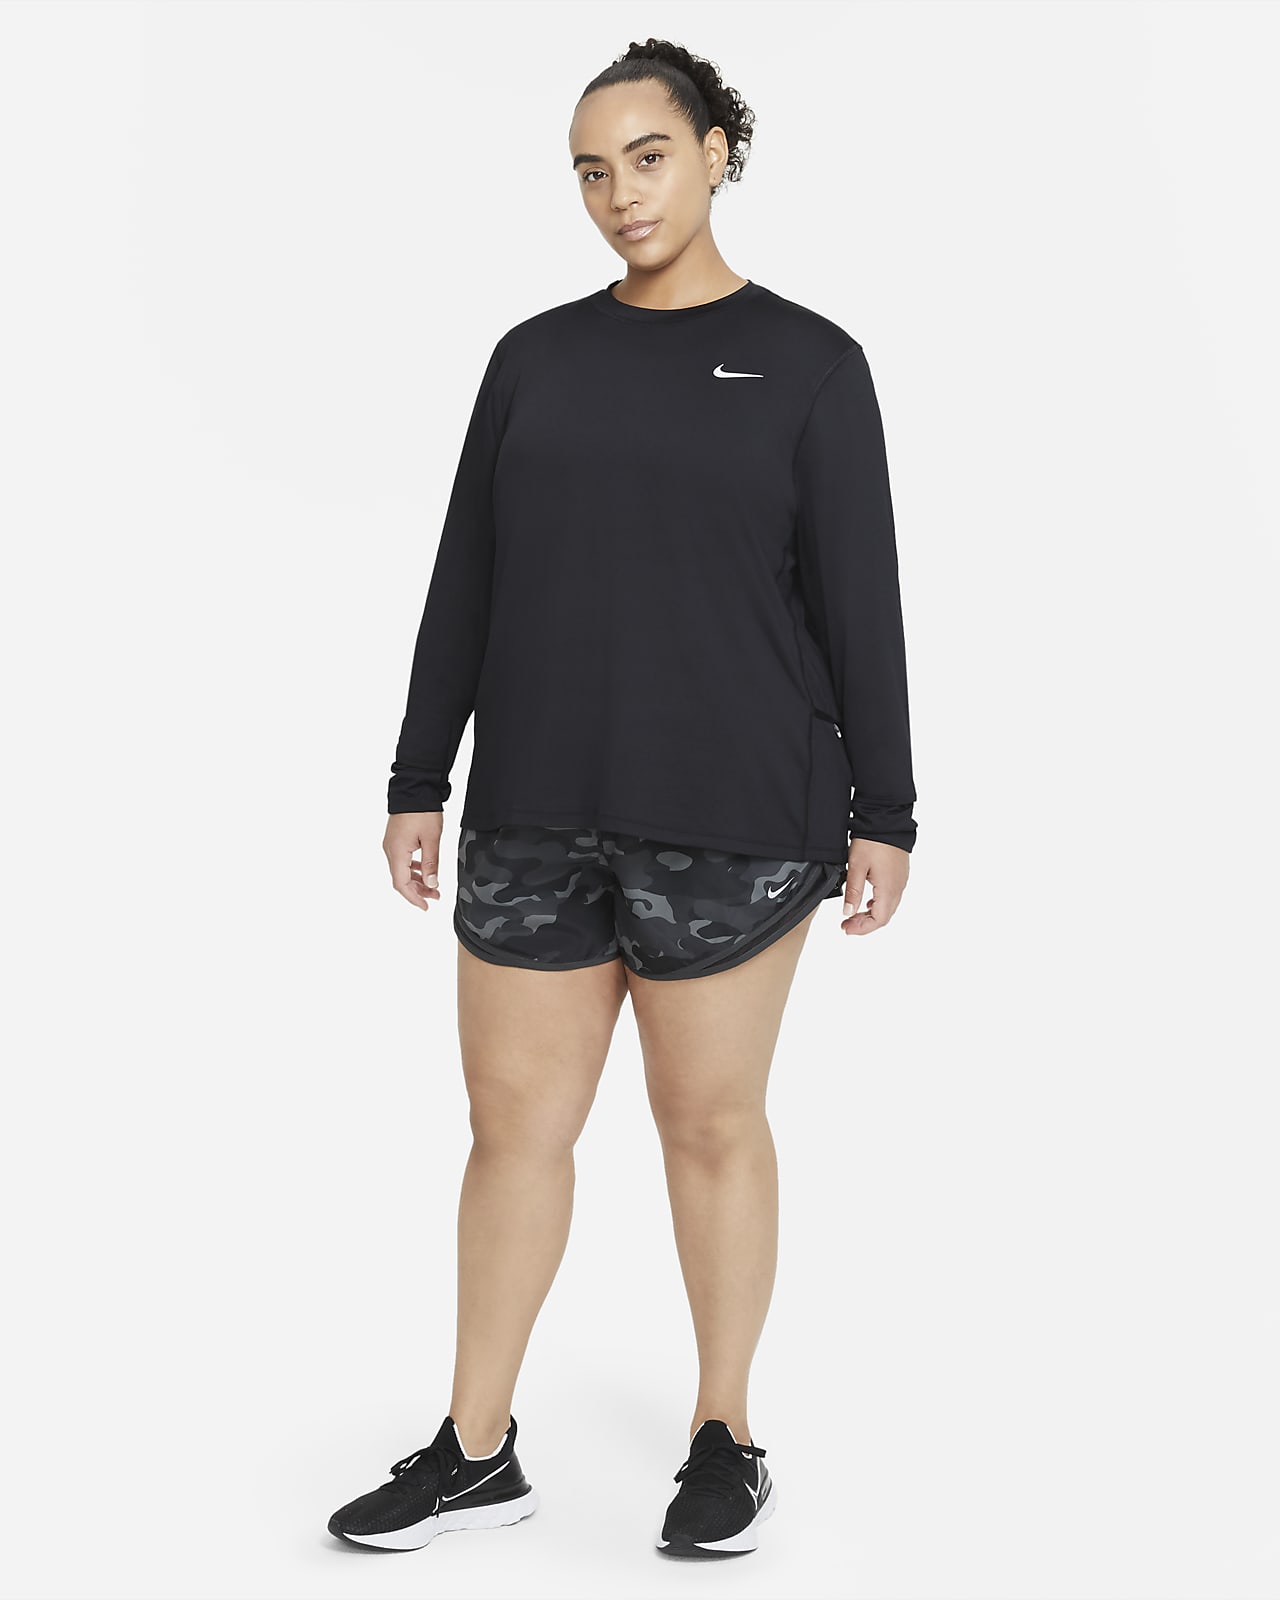 Nike Dri Fit Tempo Womens Printed Running Shorts Plus Size